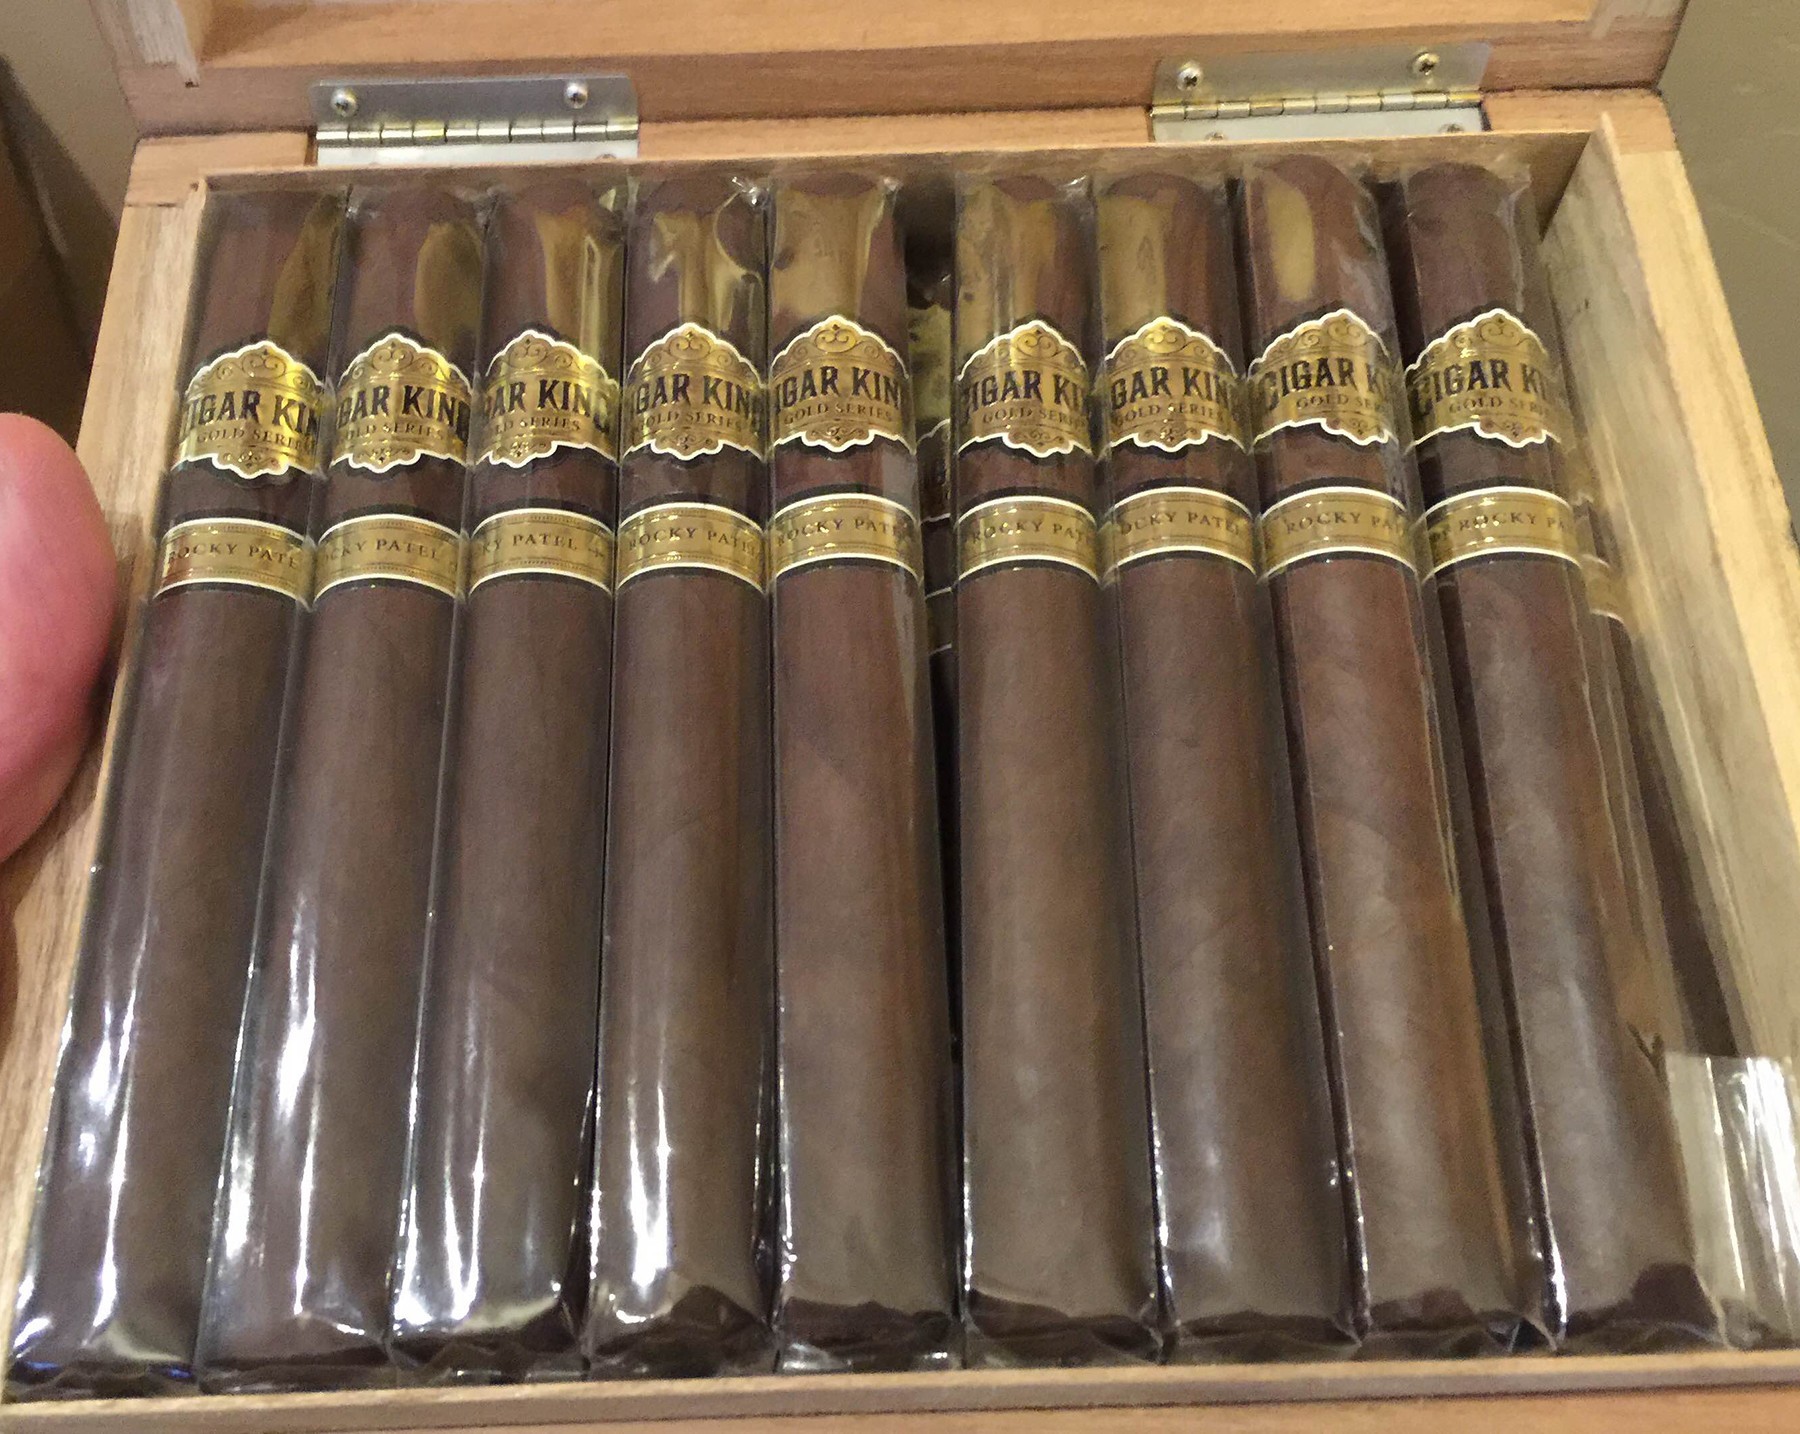 Cigar King Rocky Patel Gold Series II open box